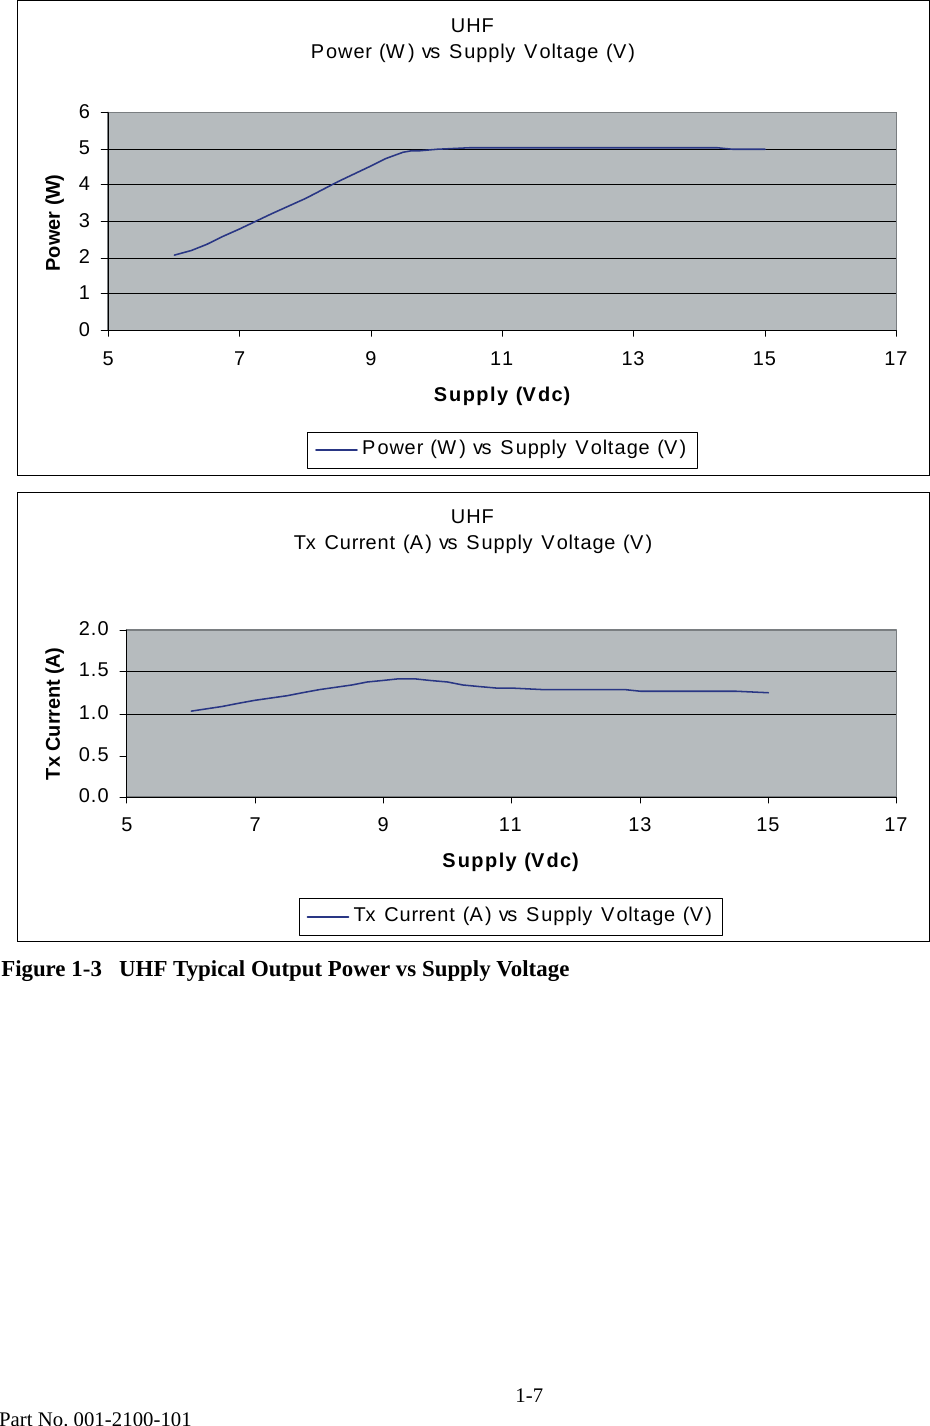 1-7Part No. 001-2100-101Figure 1-3   UHF Typical Output Power vs Supply VoltageUHFPower (W) vs Supply Voltage (V)01234565 7 9 11131517Supply (Vdc)Power (W)Power (W) vs Supply Voltage (V)UHFTx Current (A) vs Supply Voltage (V)0.00.51.01.52.05 7 9 11131517Supply (Vdc)Tx Current (A)Tx Current (A) vs Supply Voltage (V)